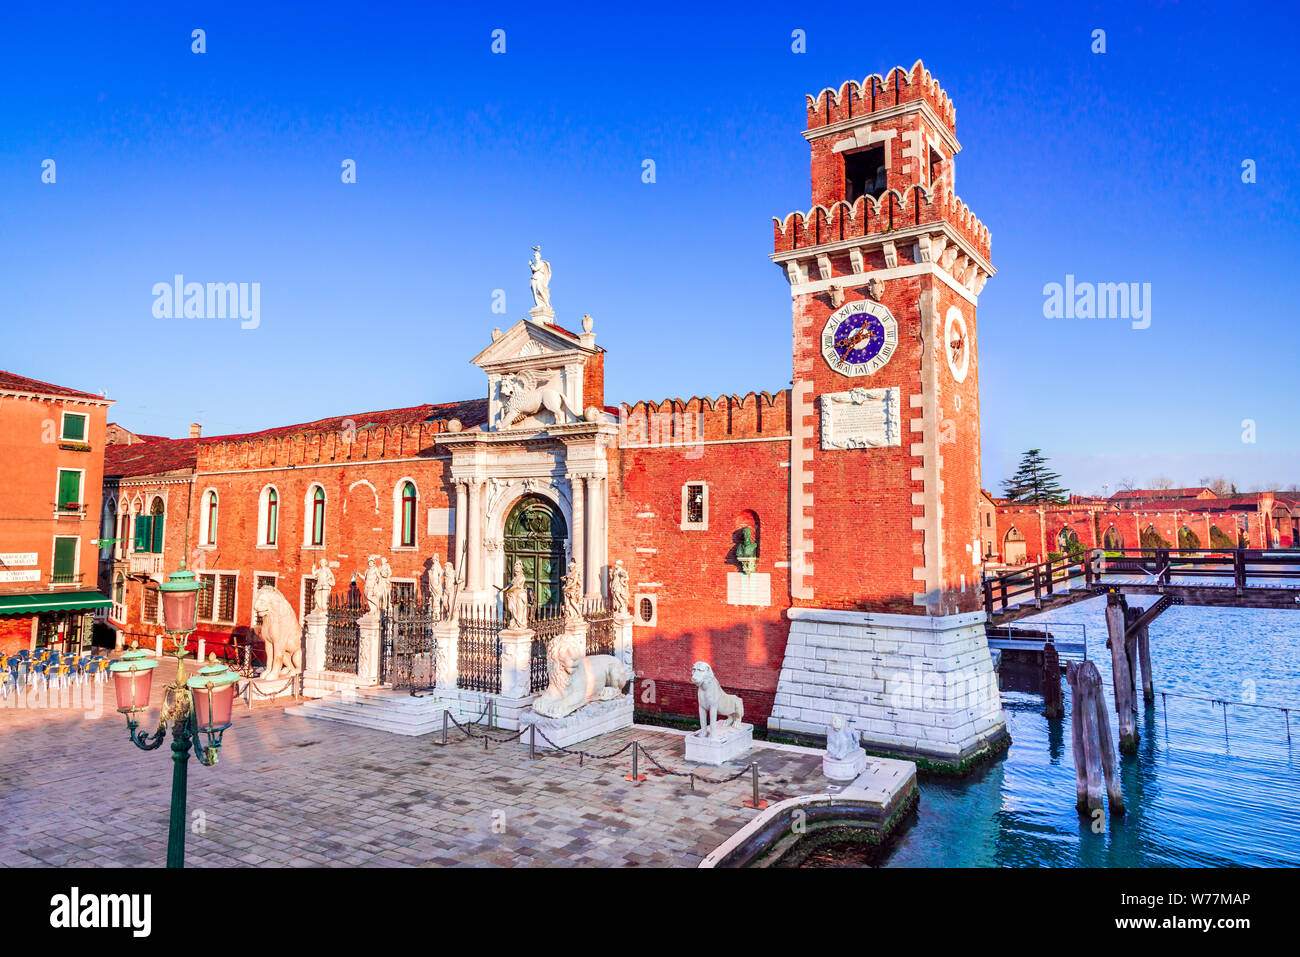 View on venetian Arsenal, Castello region in Venice, Italy. Stock Photo